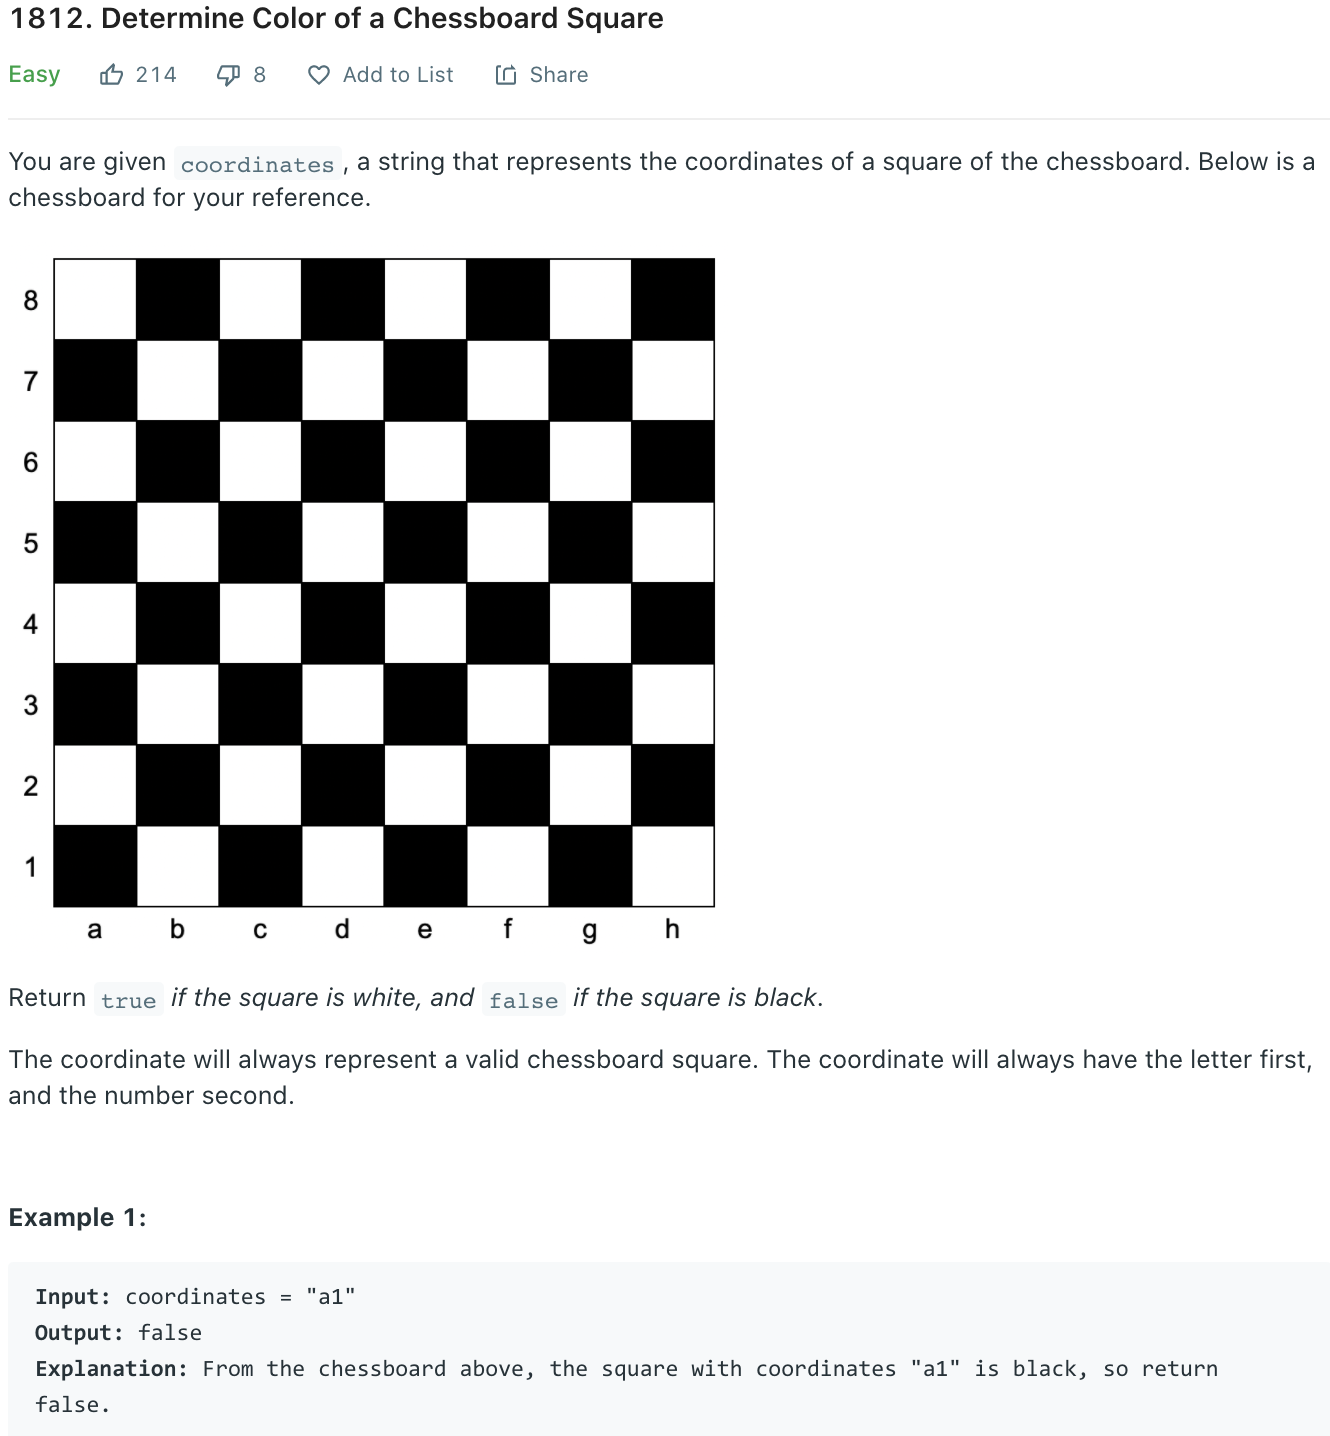 Determine Color of a Chessboard Square